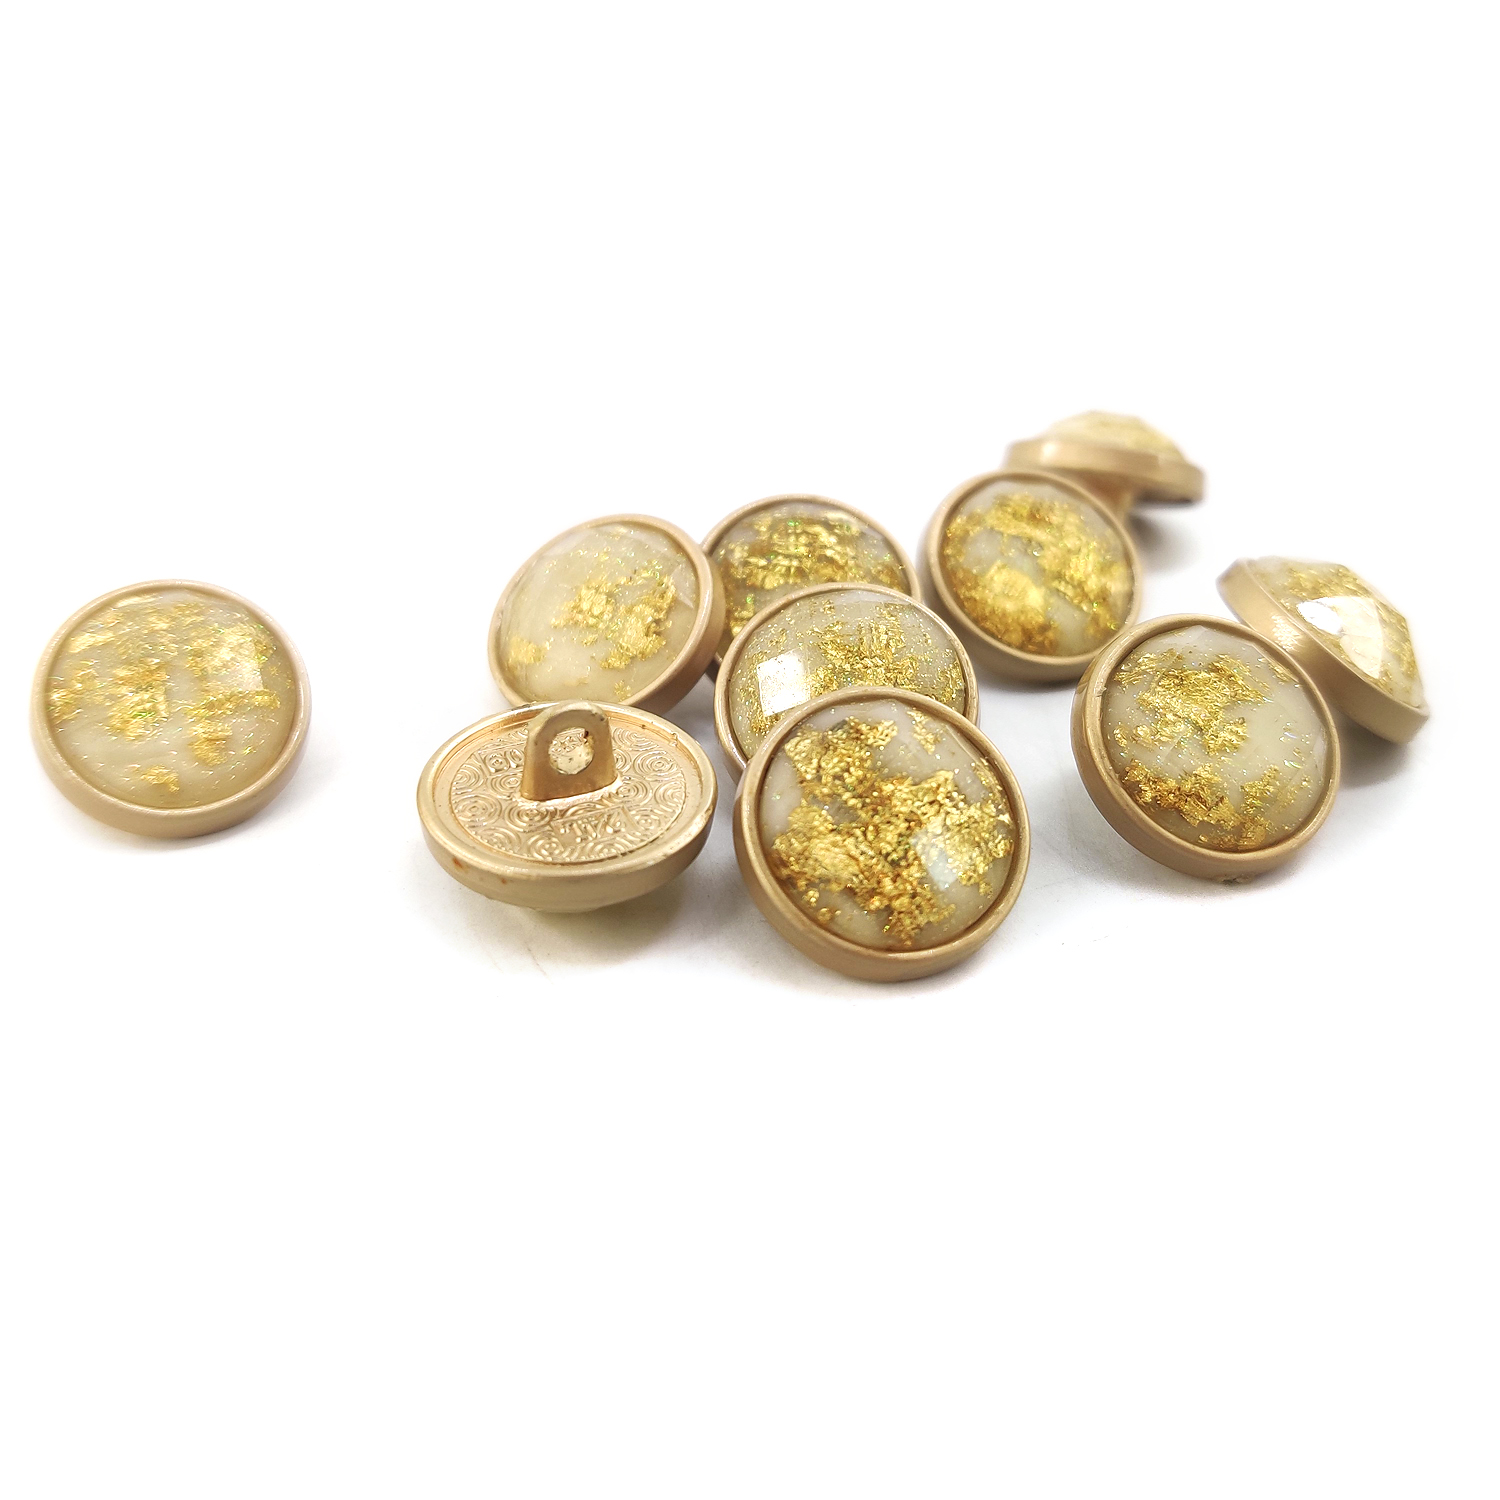 Craftisum Beveled Cut Glass Golden Foil Layer Copper Metal Base Sewing Buttons 10 Pcs - 15mm, 5/8"